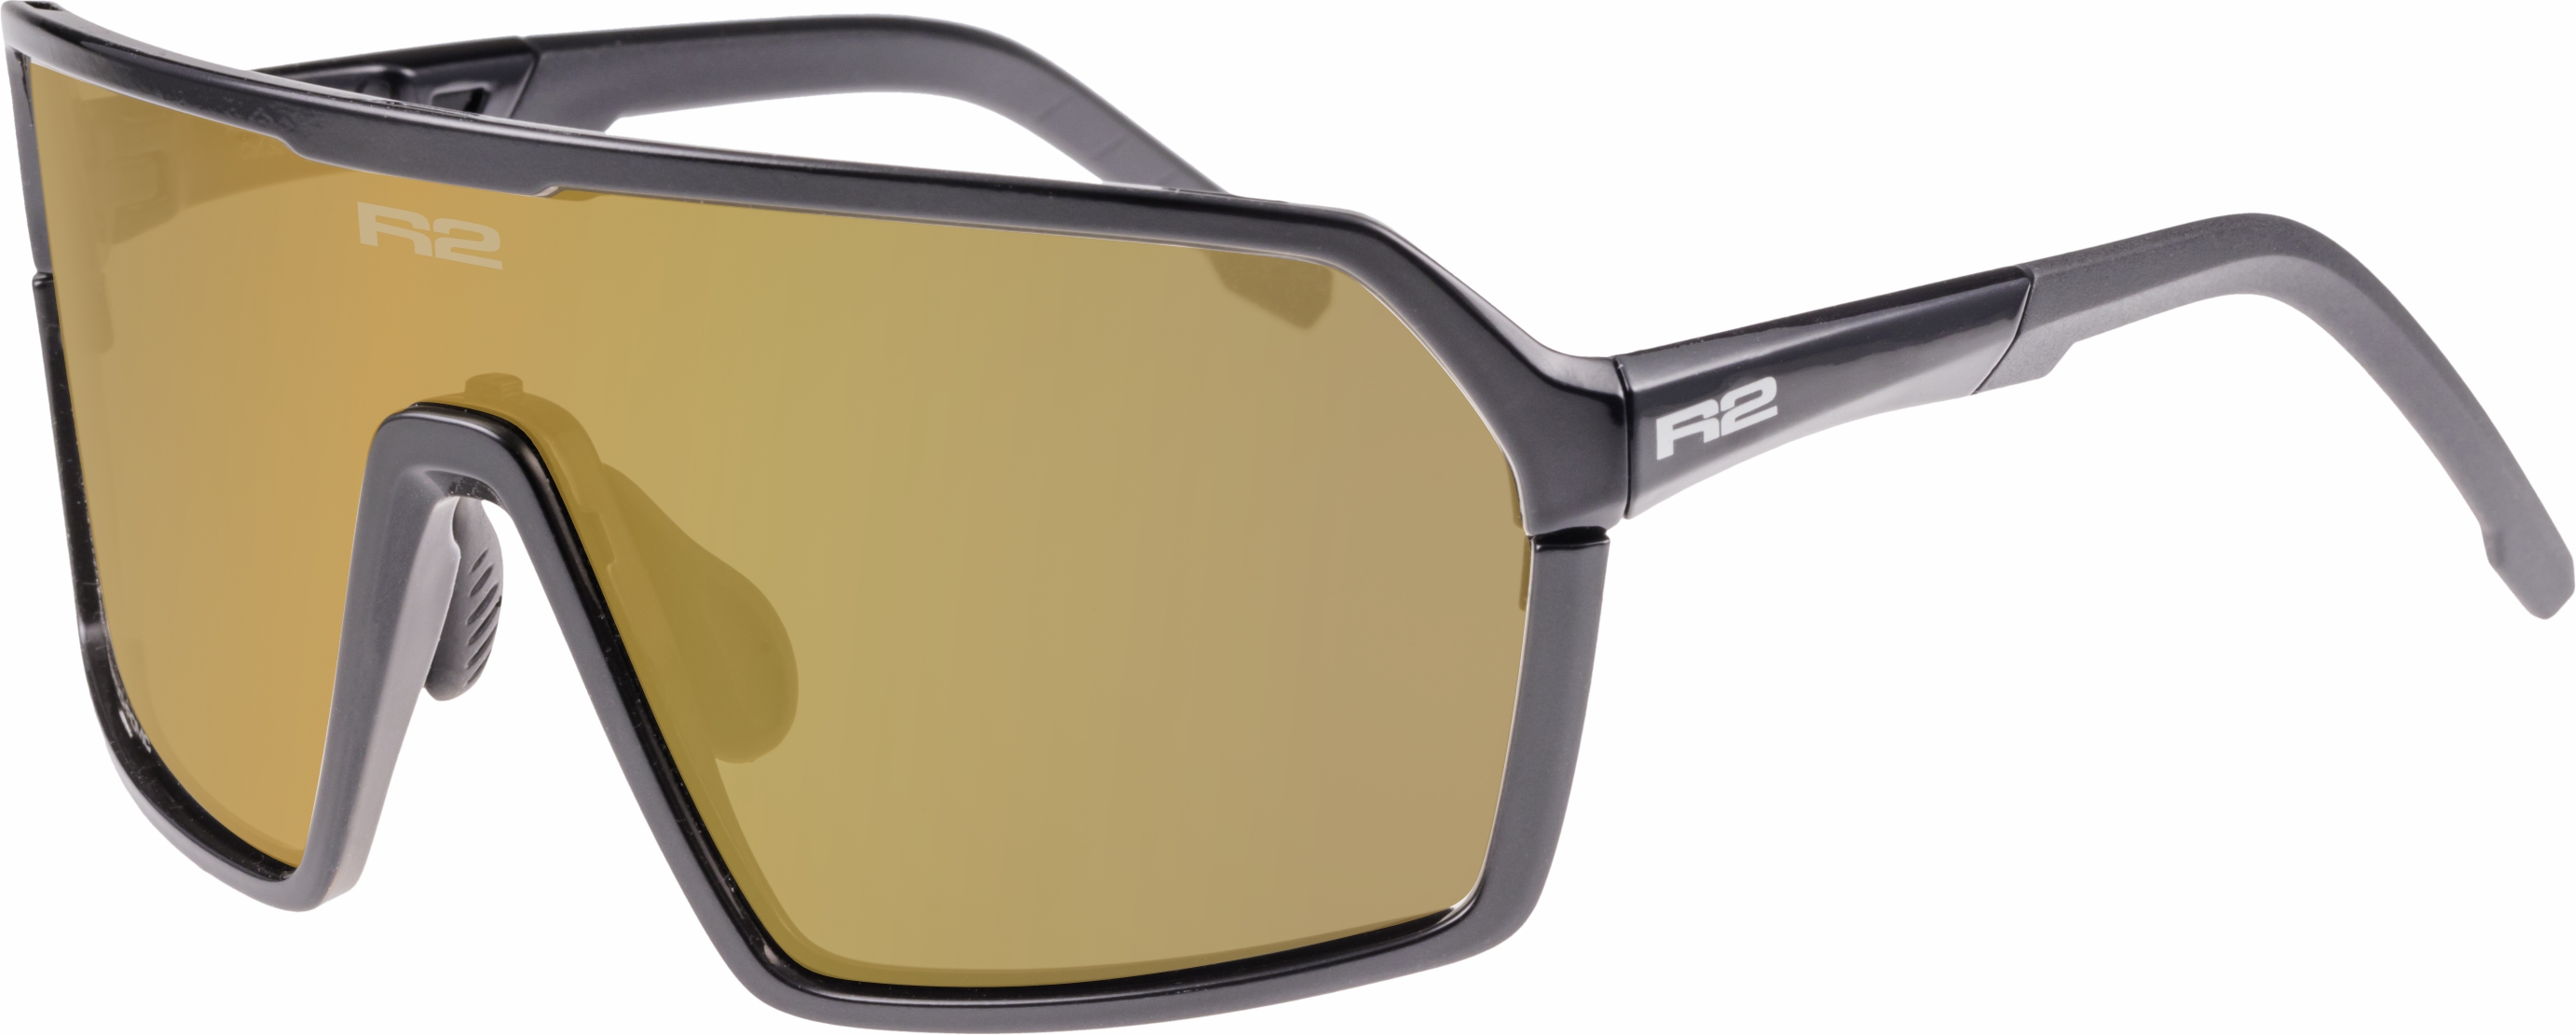 Sport sunglasses R2 FACTOR AT111A